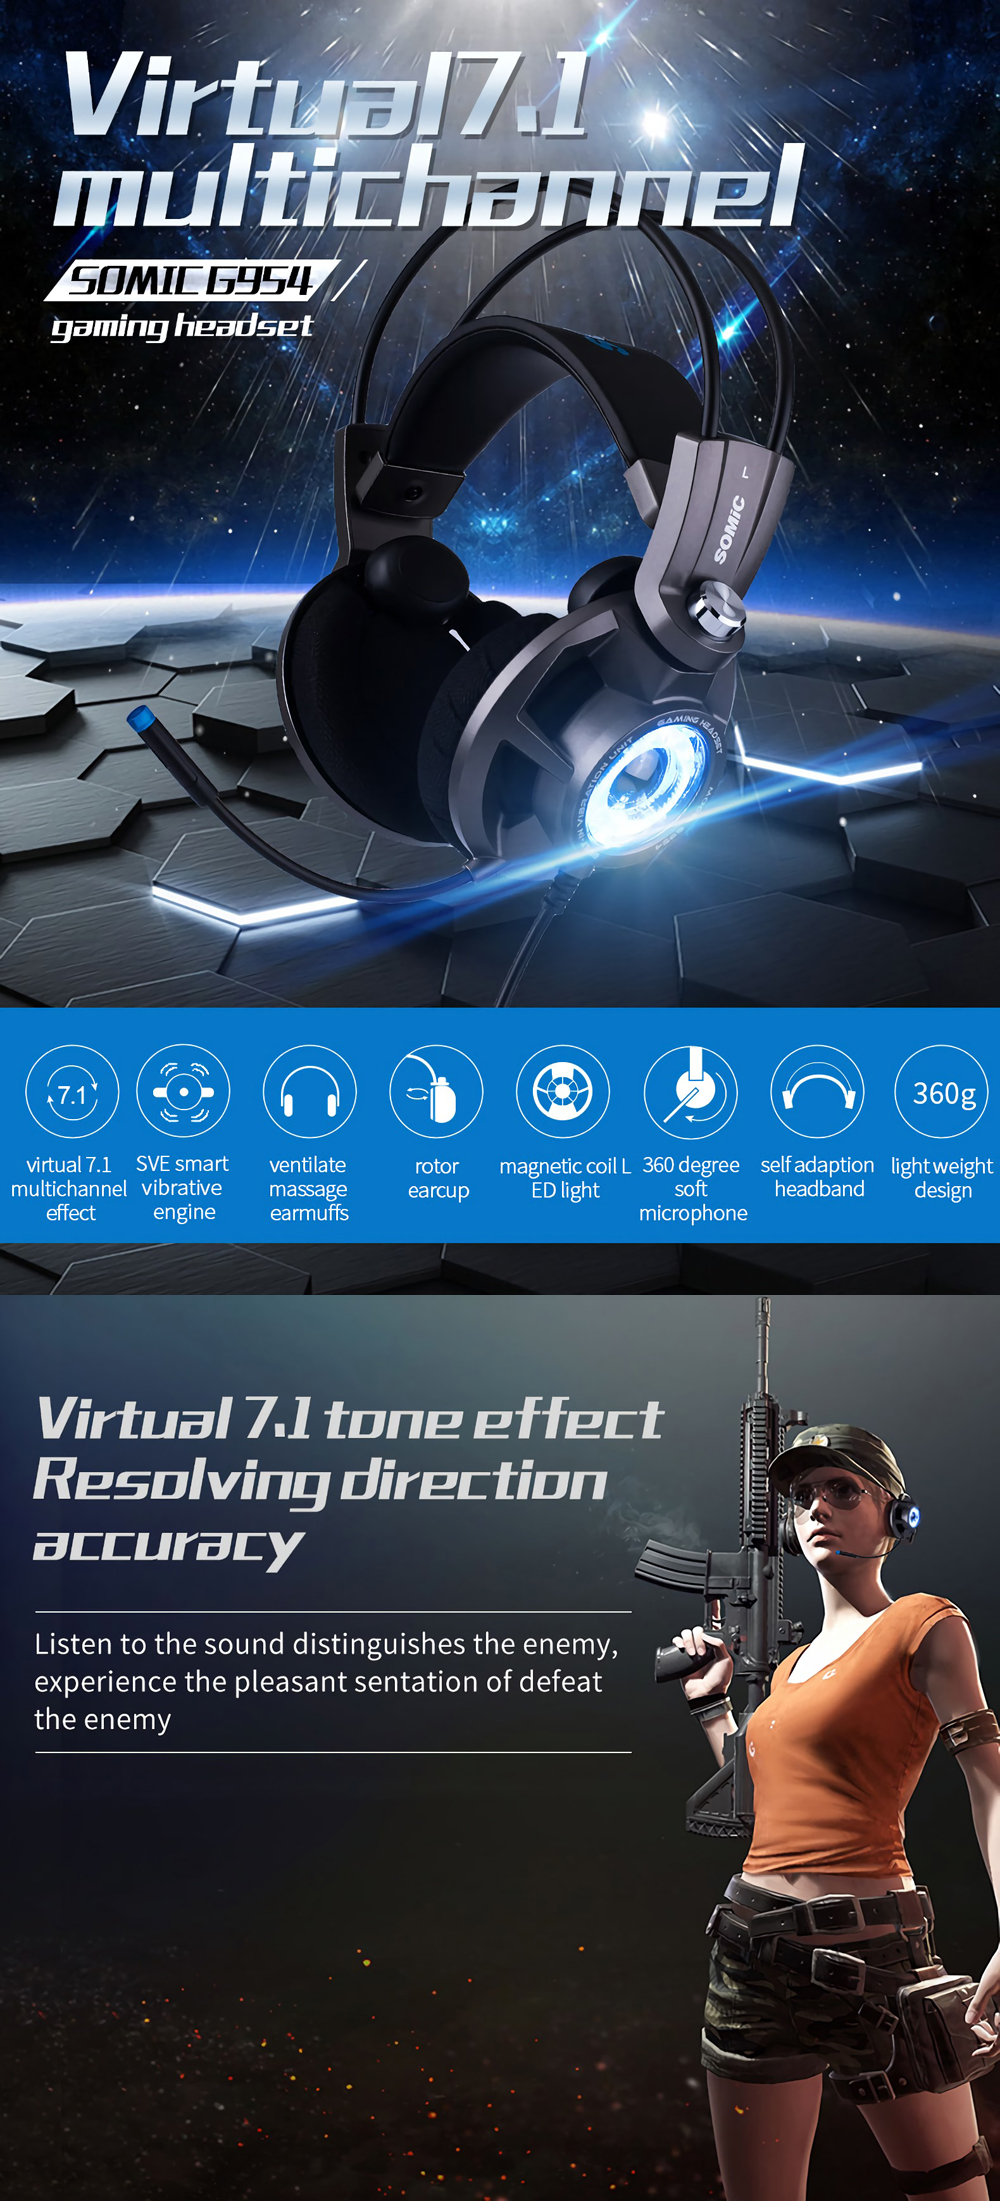 SOMiC G954 USB Wired Virtual 7.1 Surround Sound SVE Vibration Gaming Headphone Headset 87